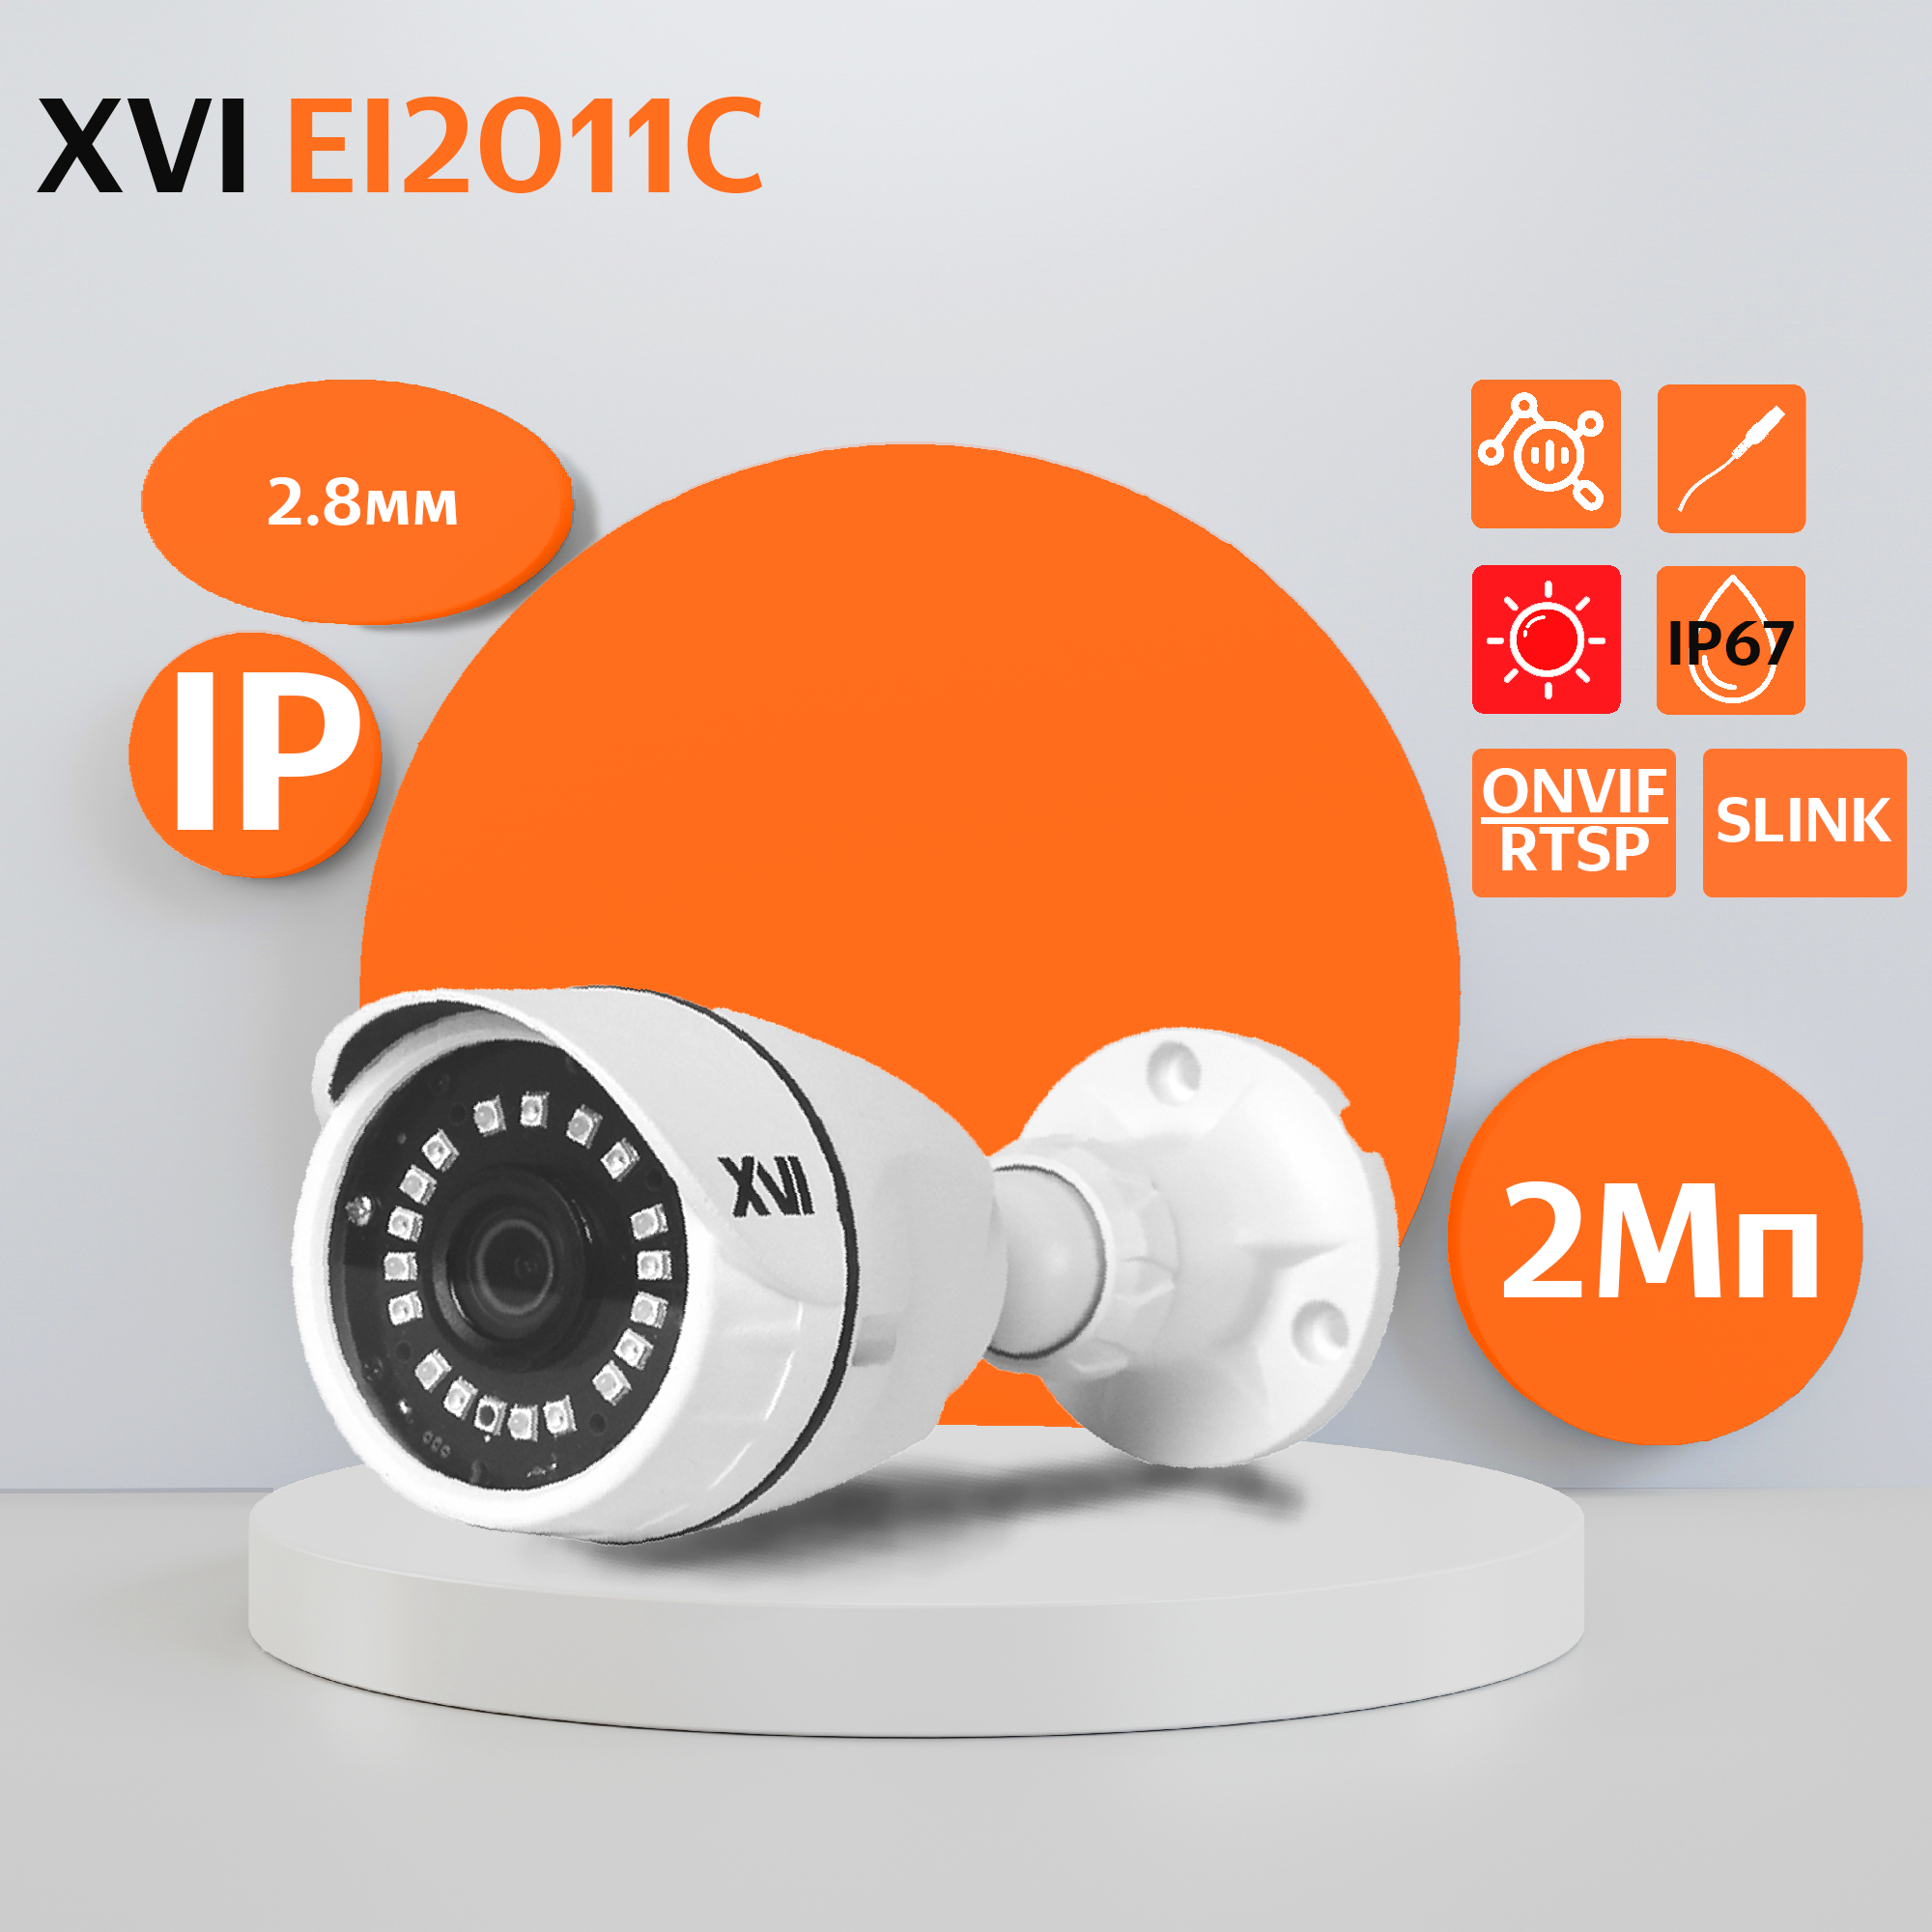 Уличная IP камера XVI EI2011C, 2Мп, фикс.объектив, ИК, ан-ка (f= 2.8мм (H115,V54)) admin